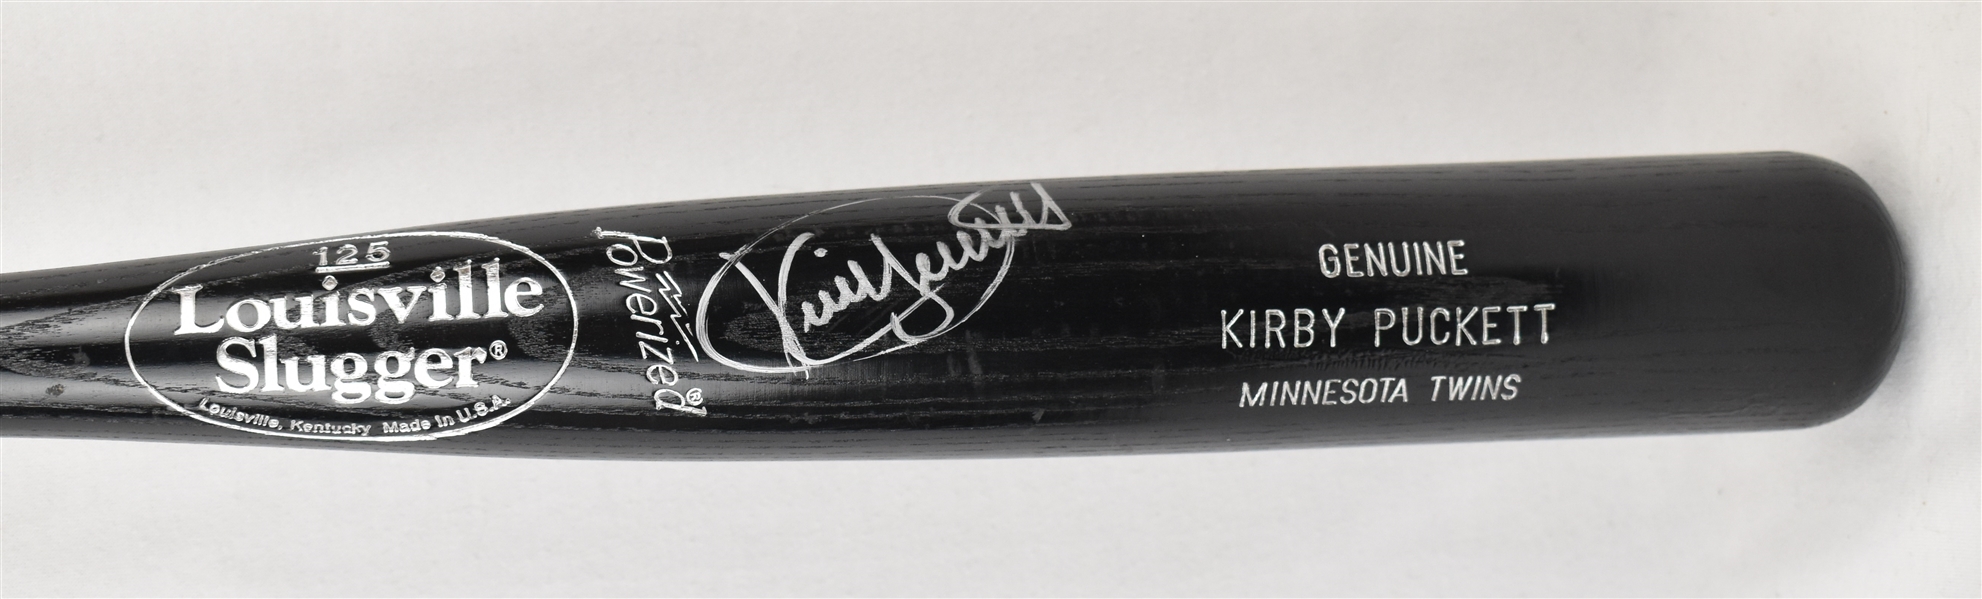 Kirby Puckett Autographed Signature Model Bat